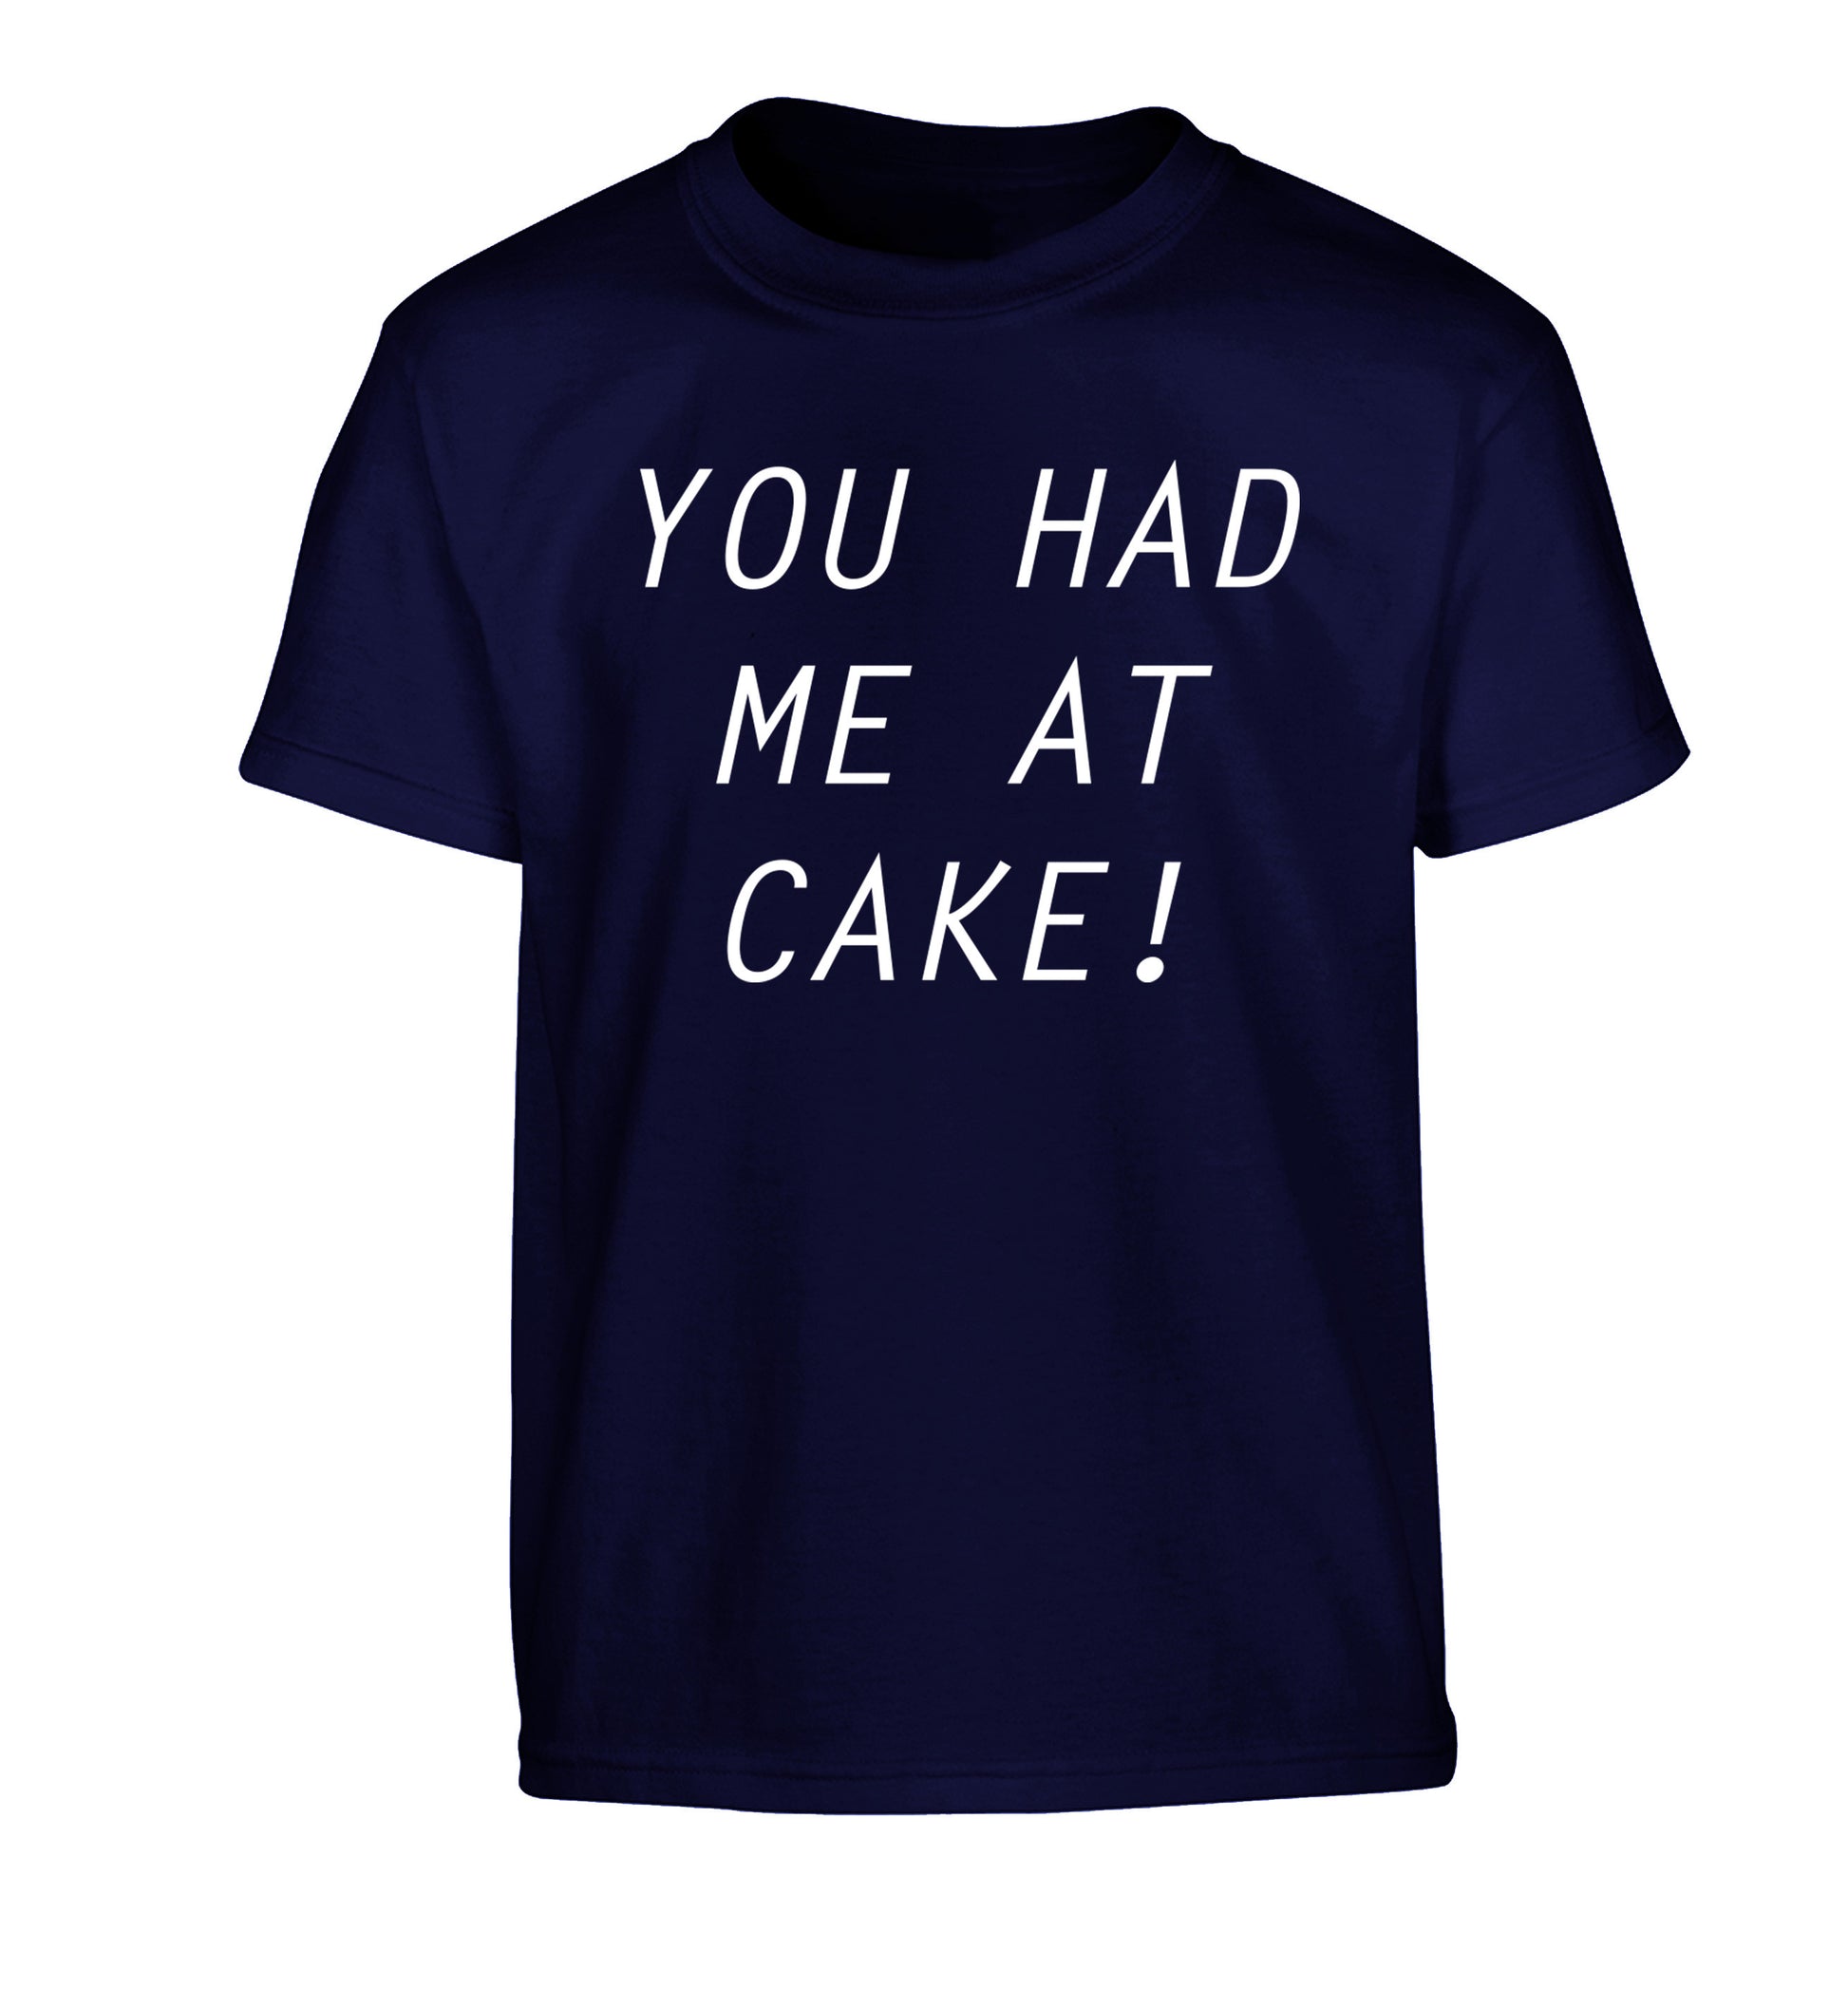 You had me at cake Children's navy Tshirt 12-14 Years